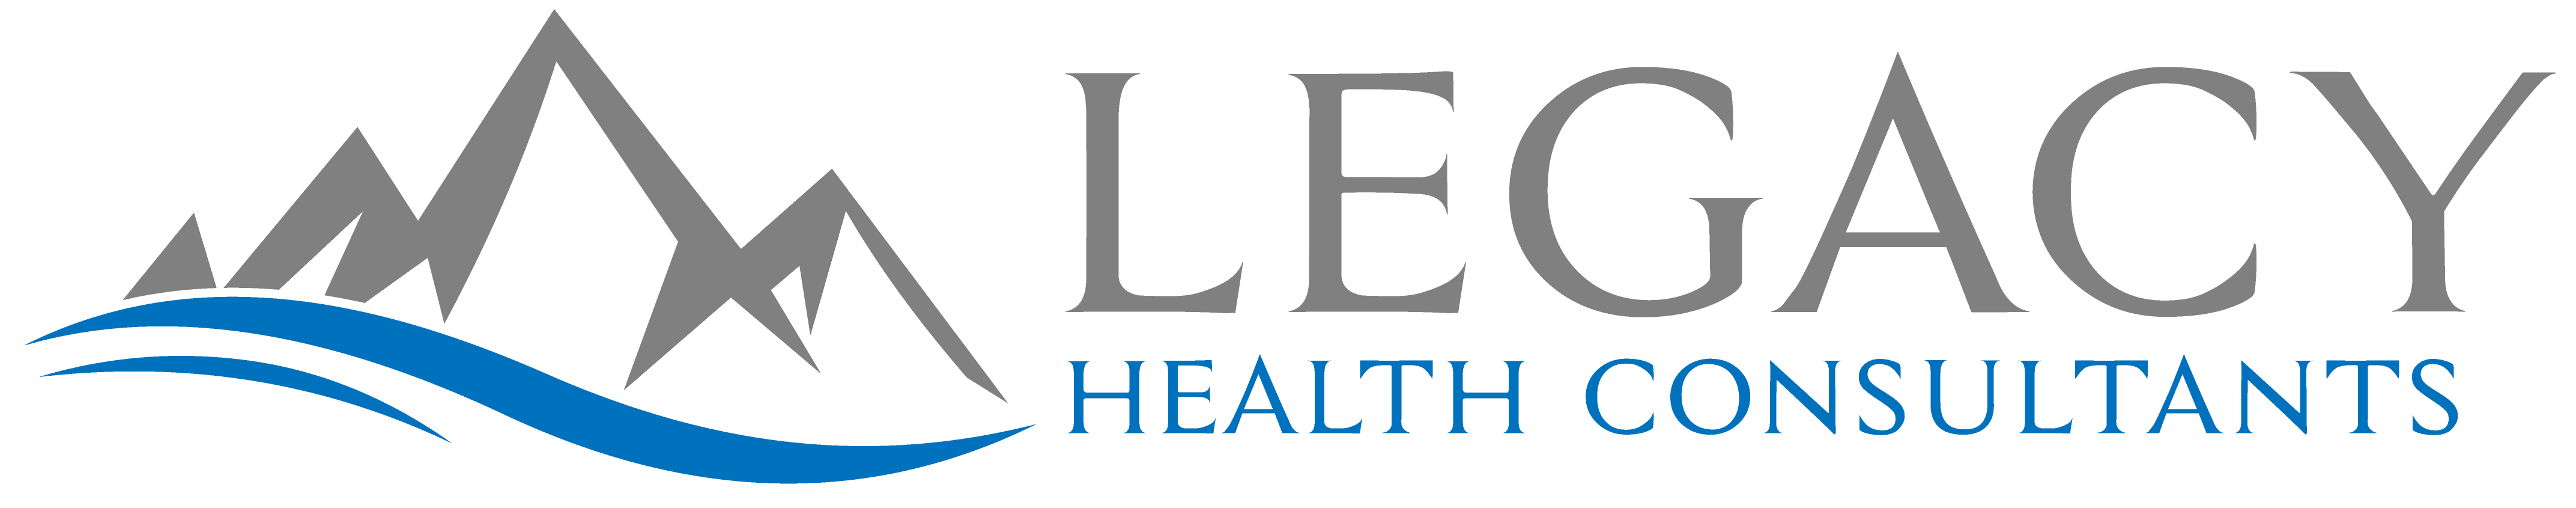 Legacy Health Consultants